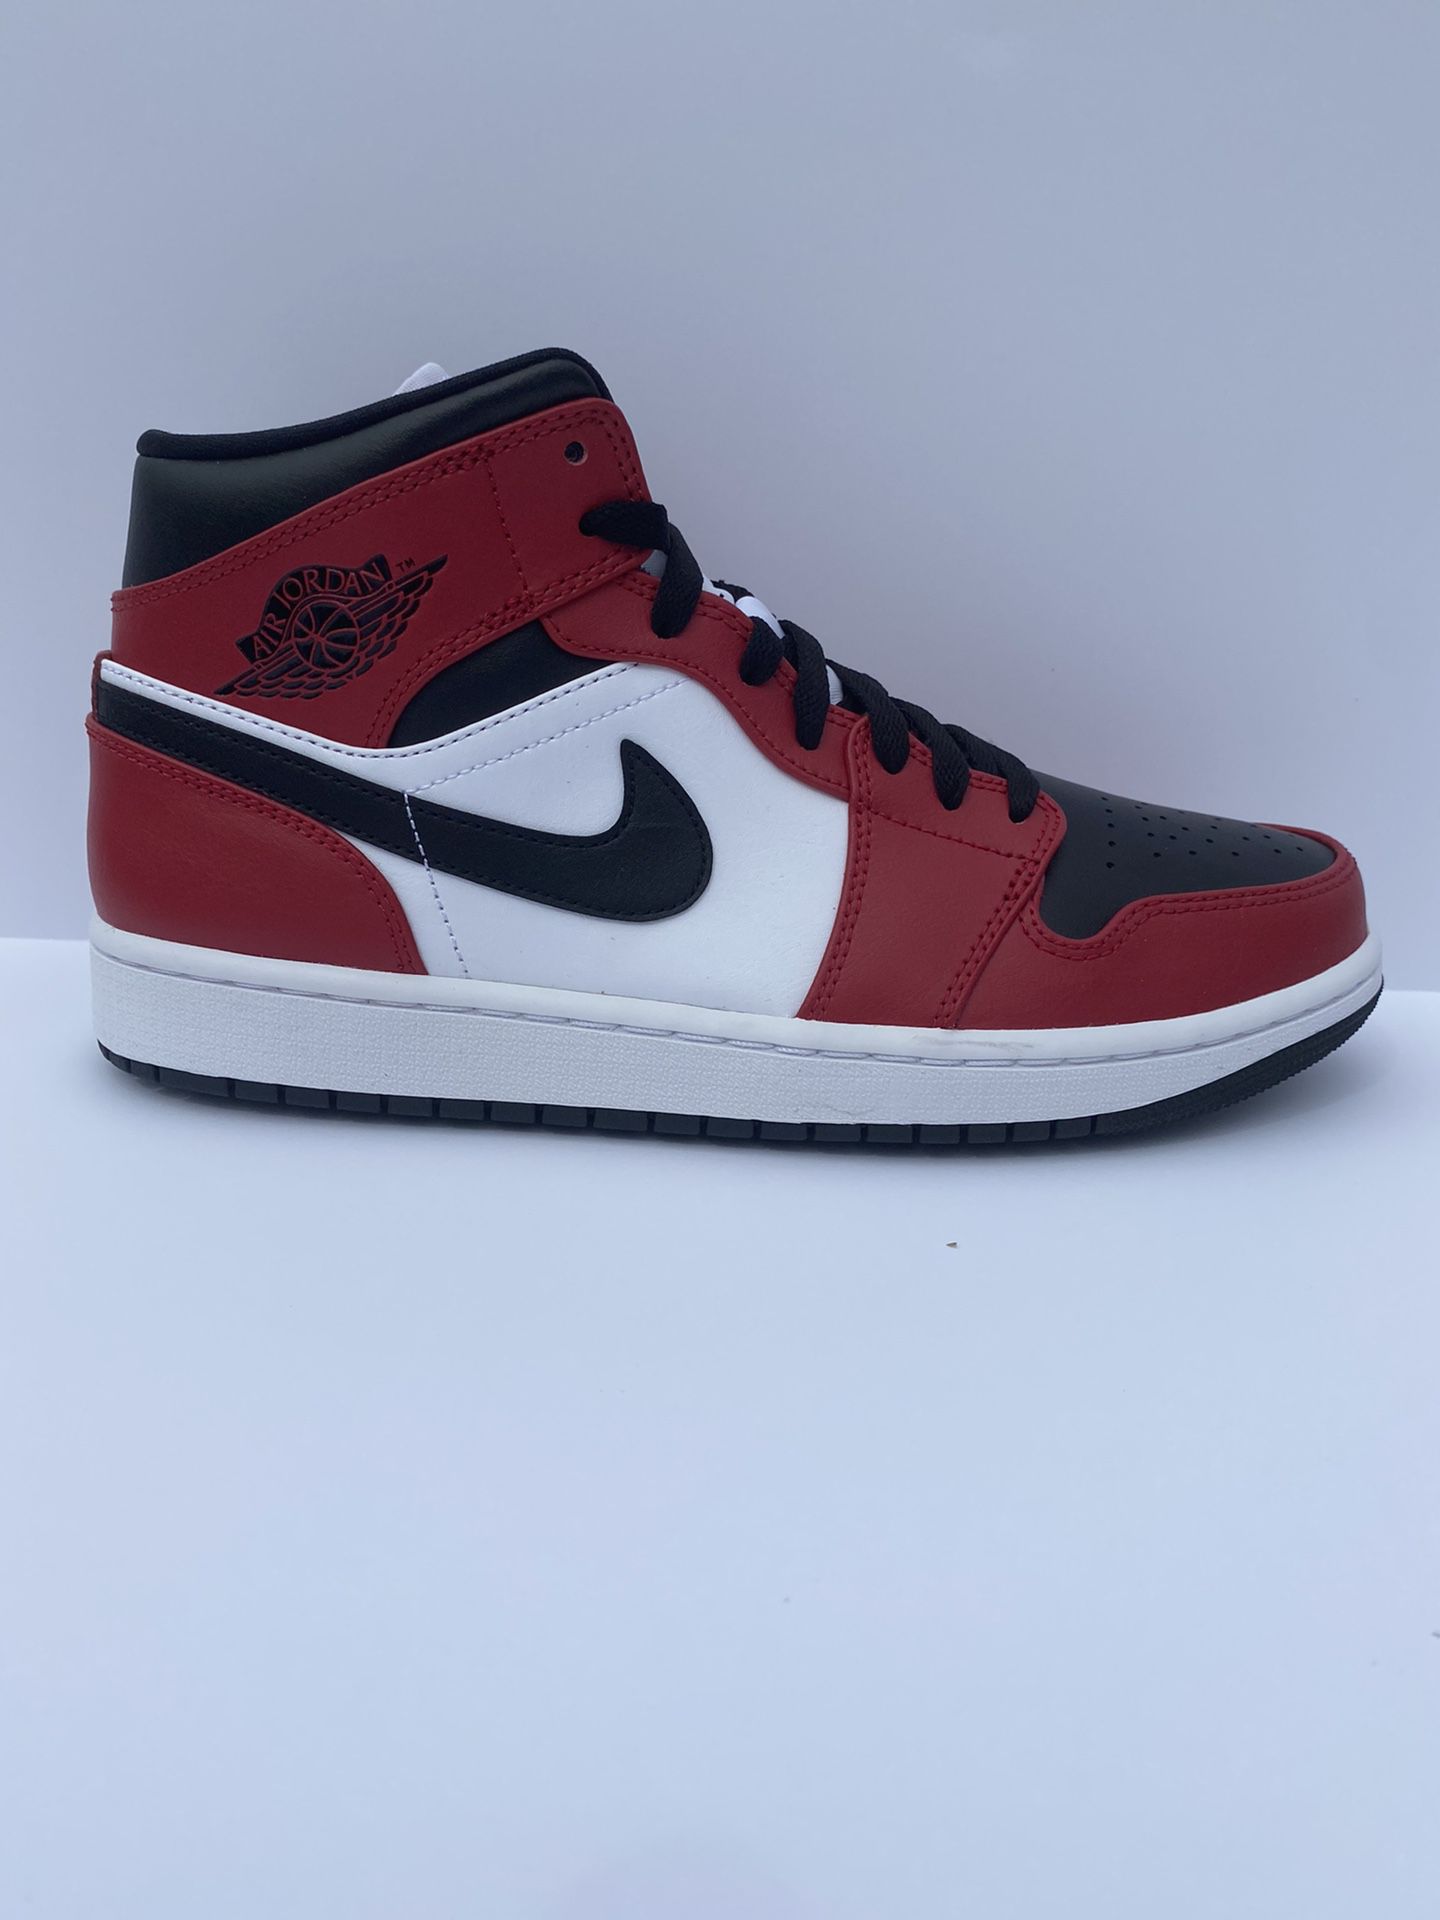 Air Jordan 1 Mid “Chicago Toe” size 11.5